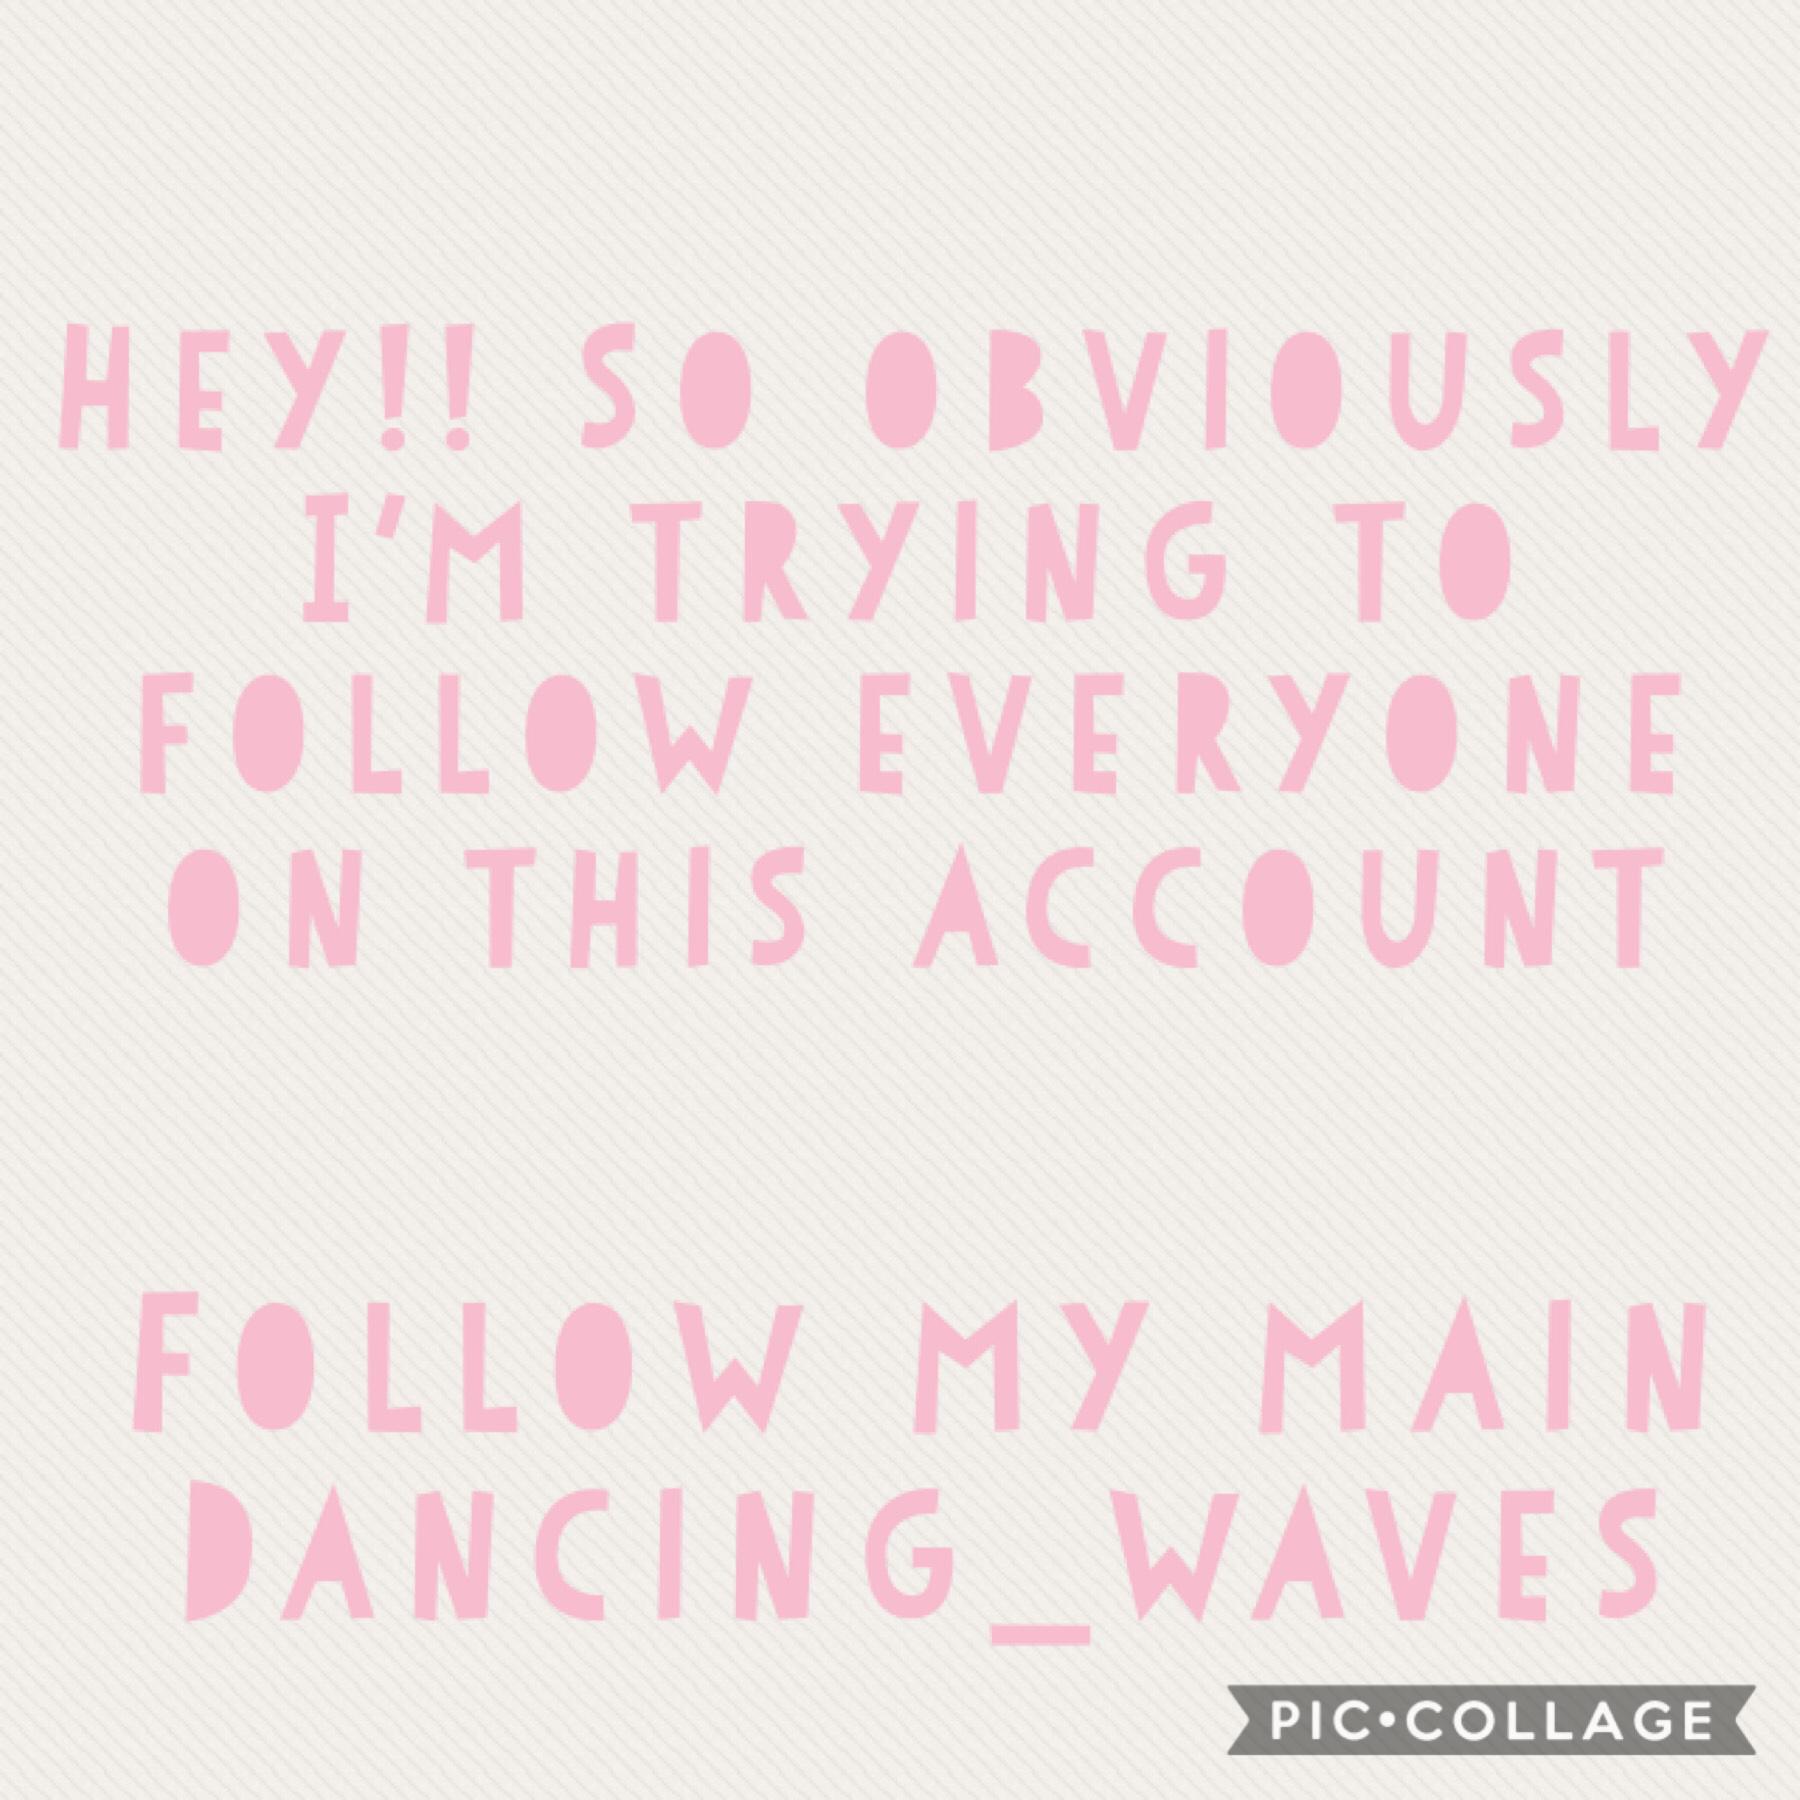 Follow my main please!! ❤️❤️